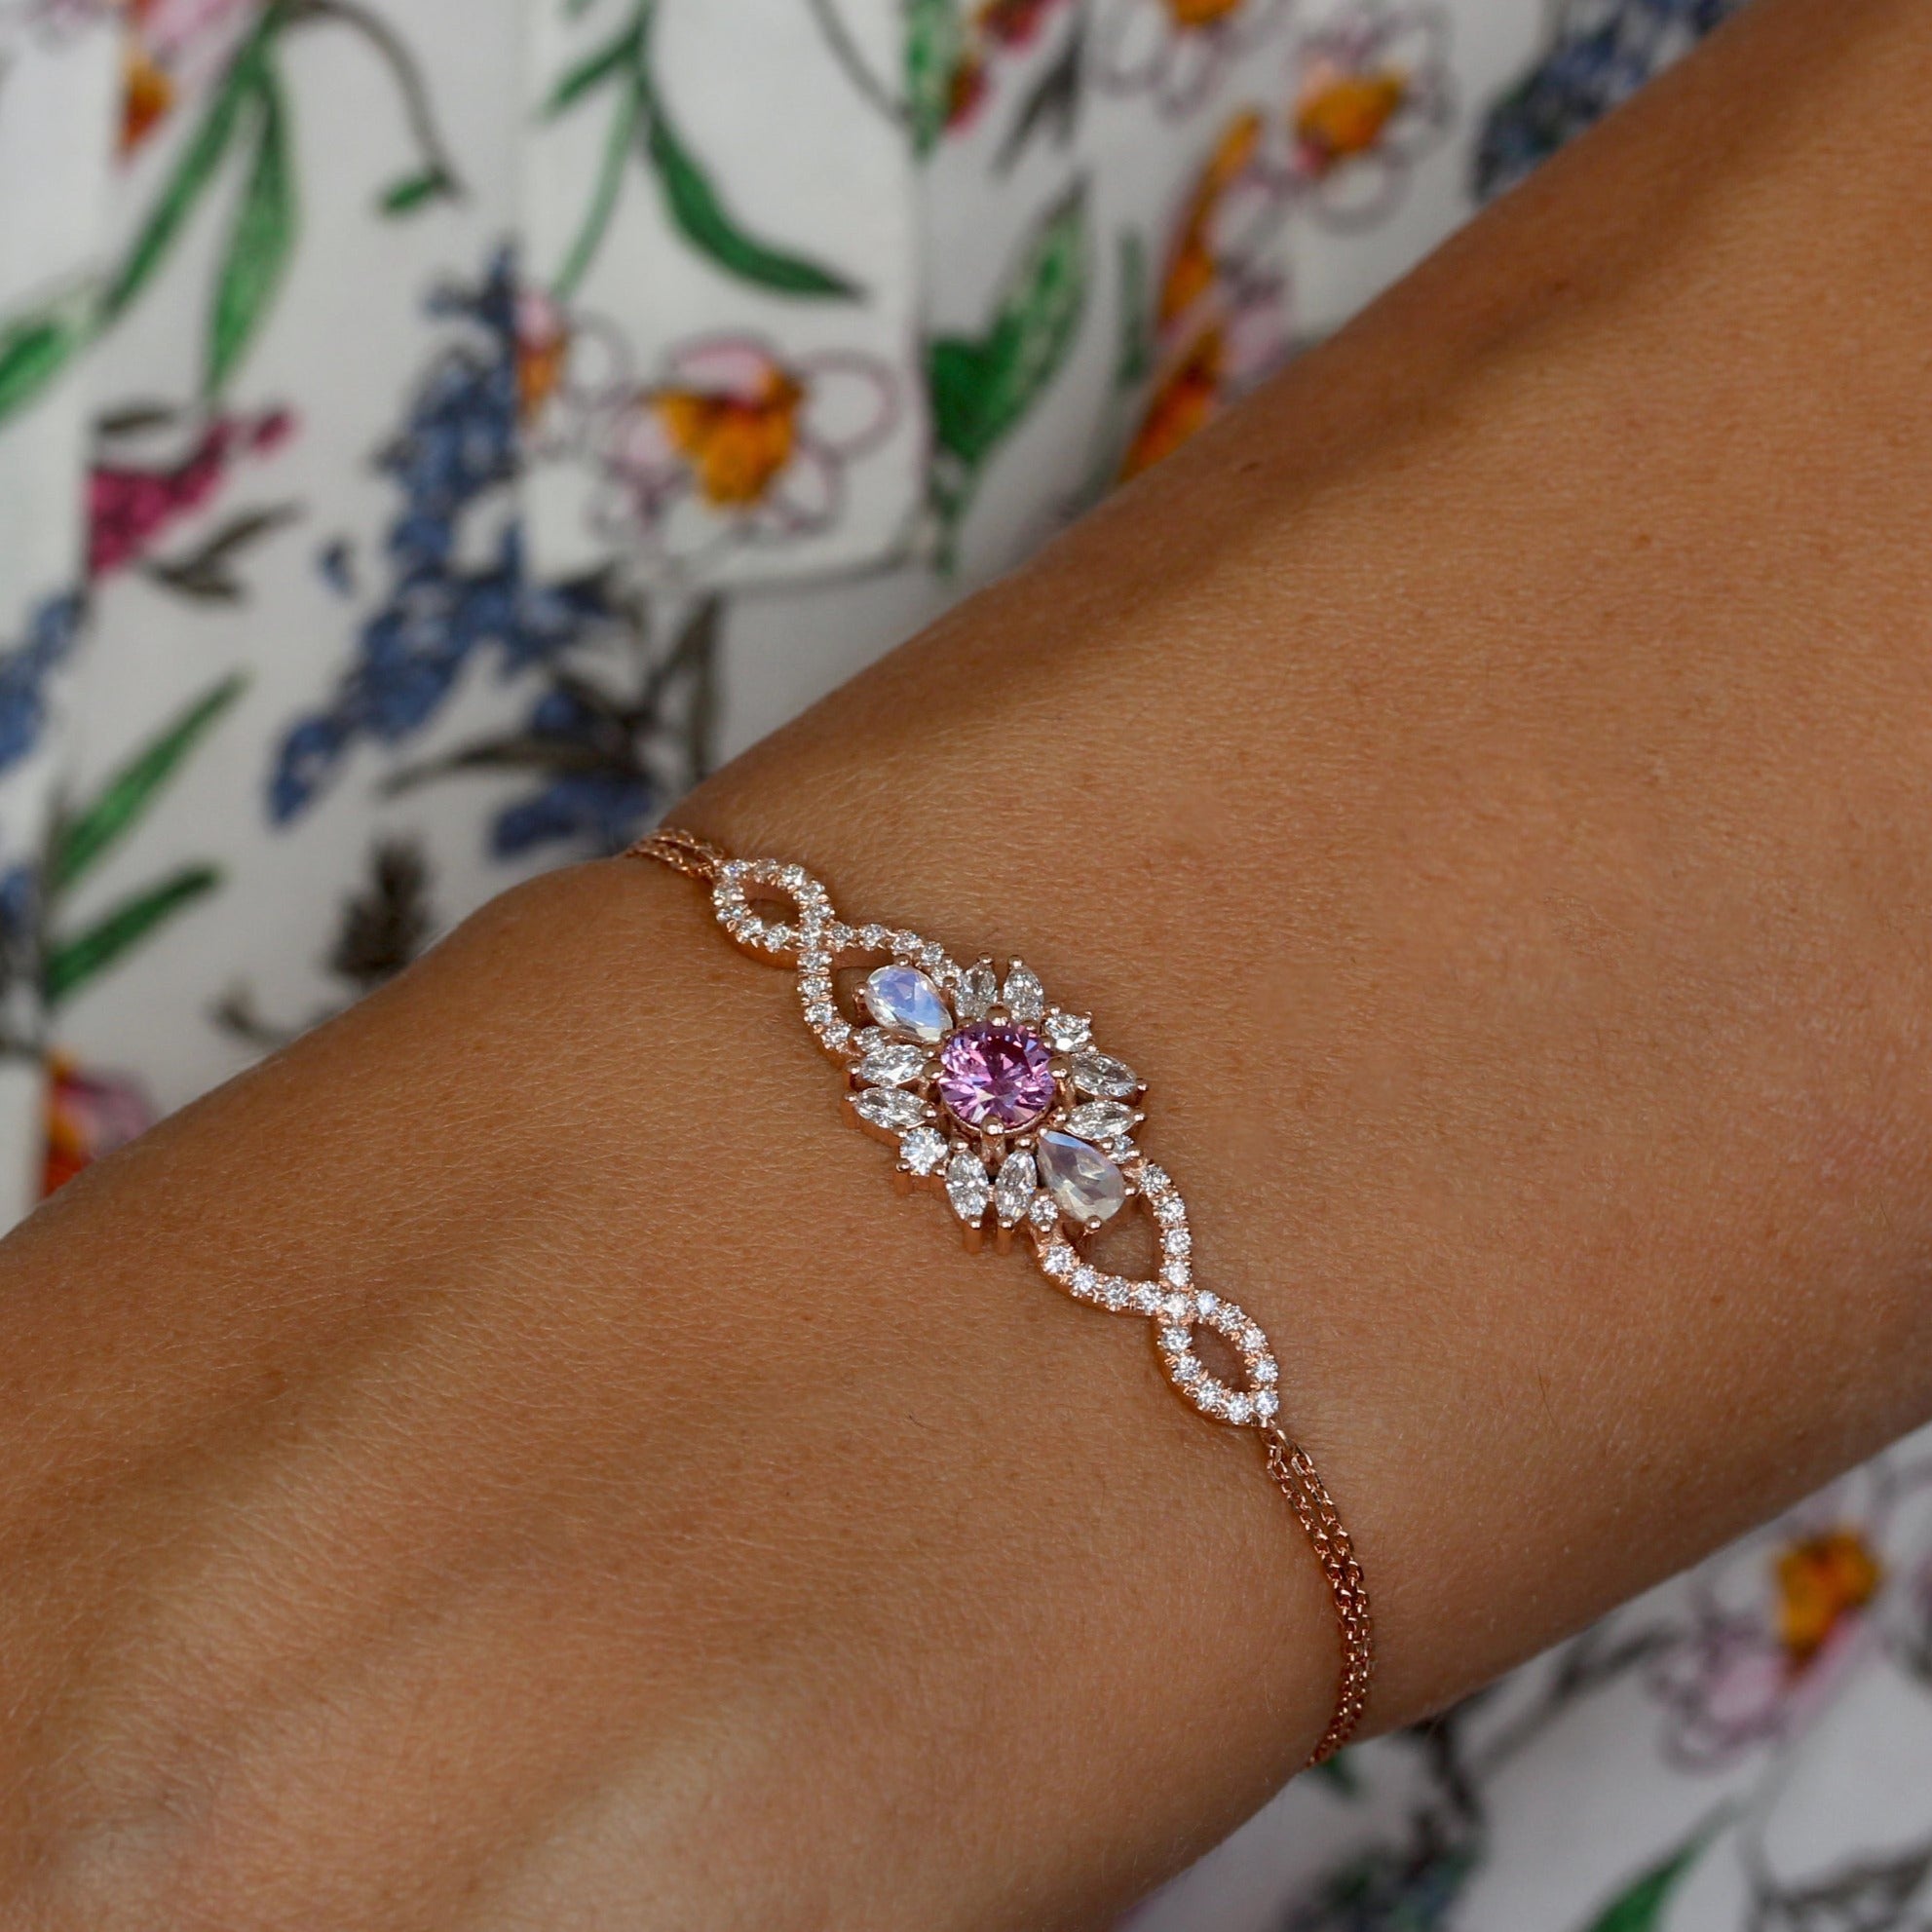 Lavender Sapphire & Moonstones Floral Diamond Bracelet - "Odisea"